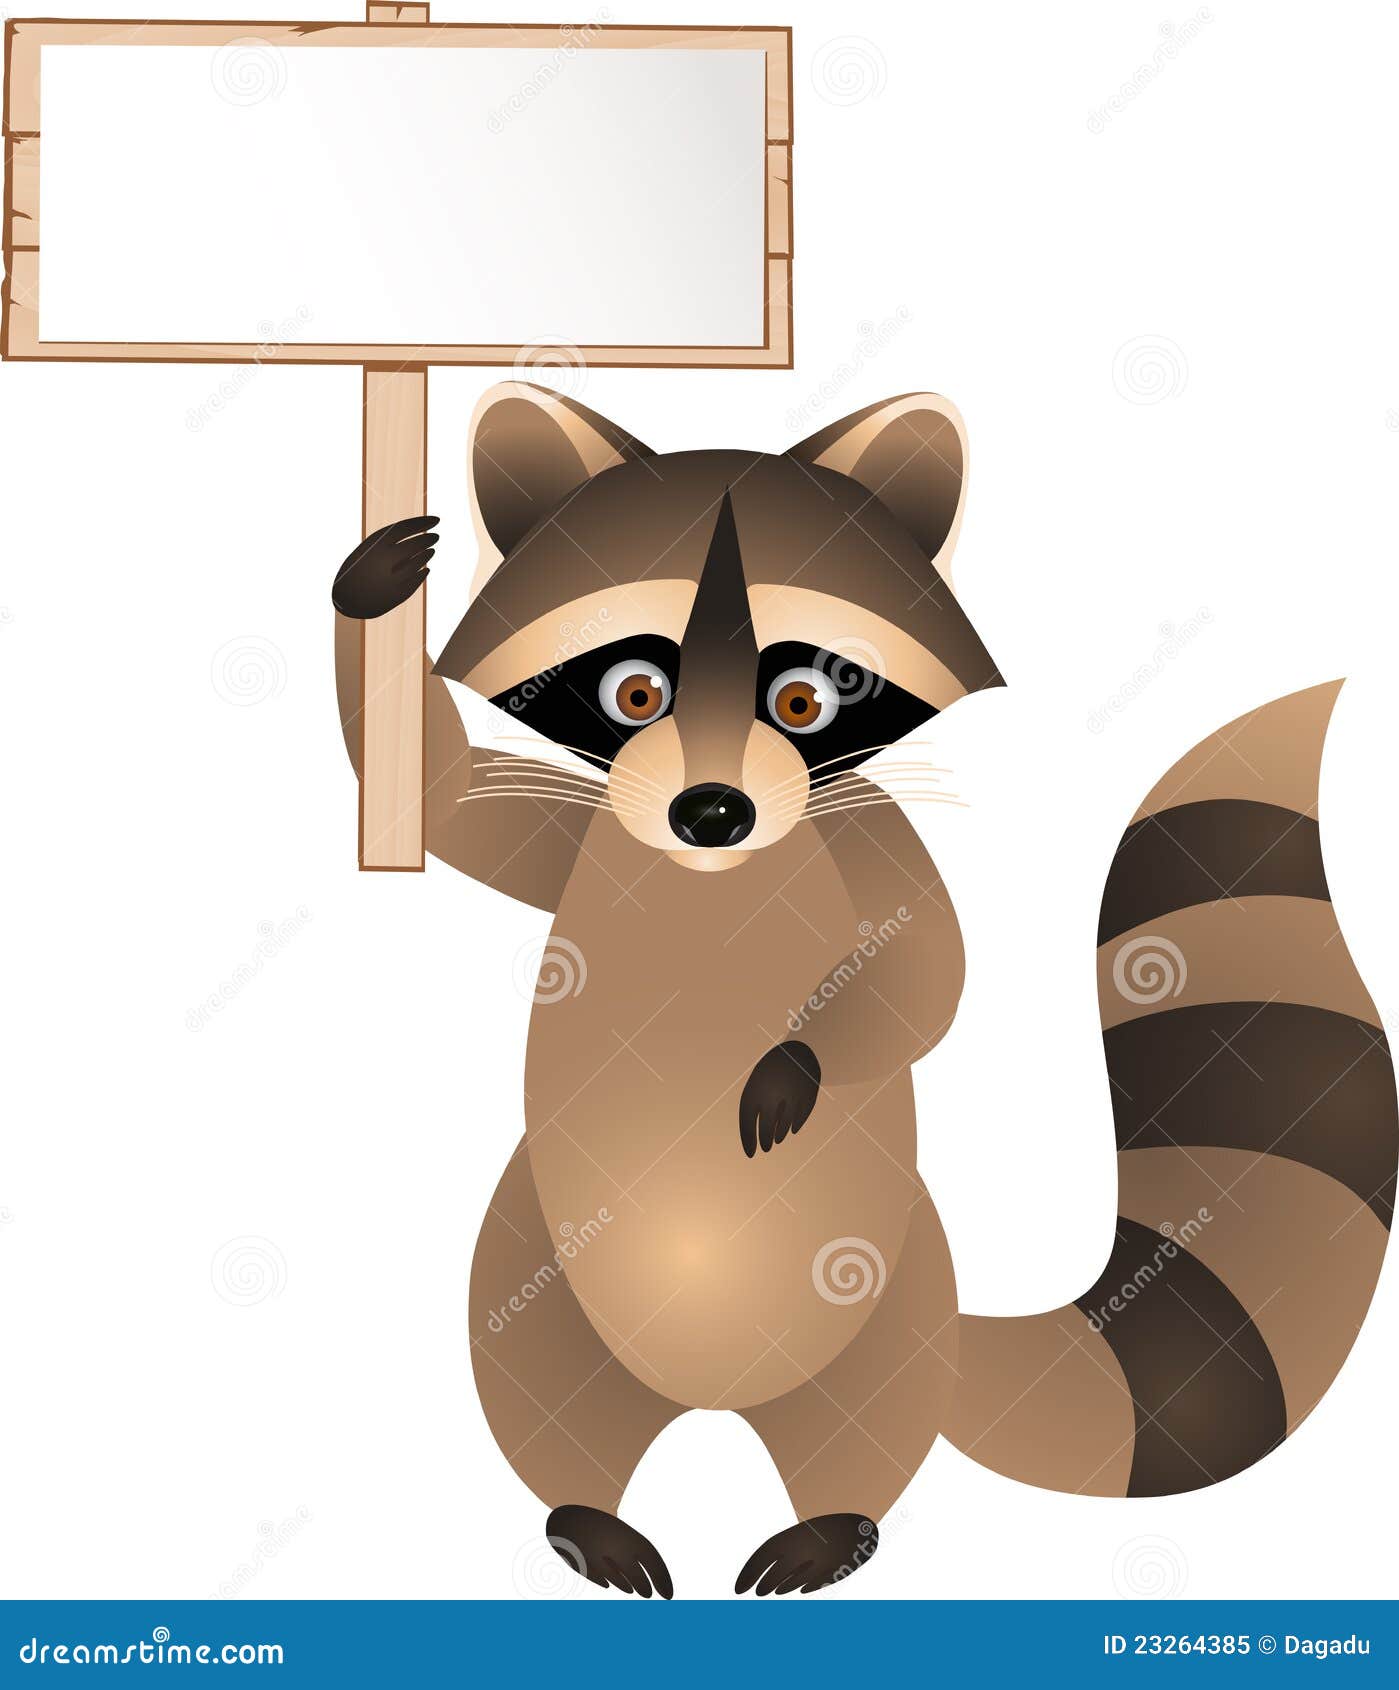 free cartoon raccoon clipart - photo #48